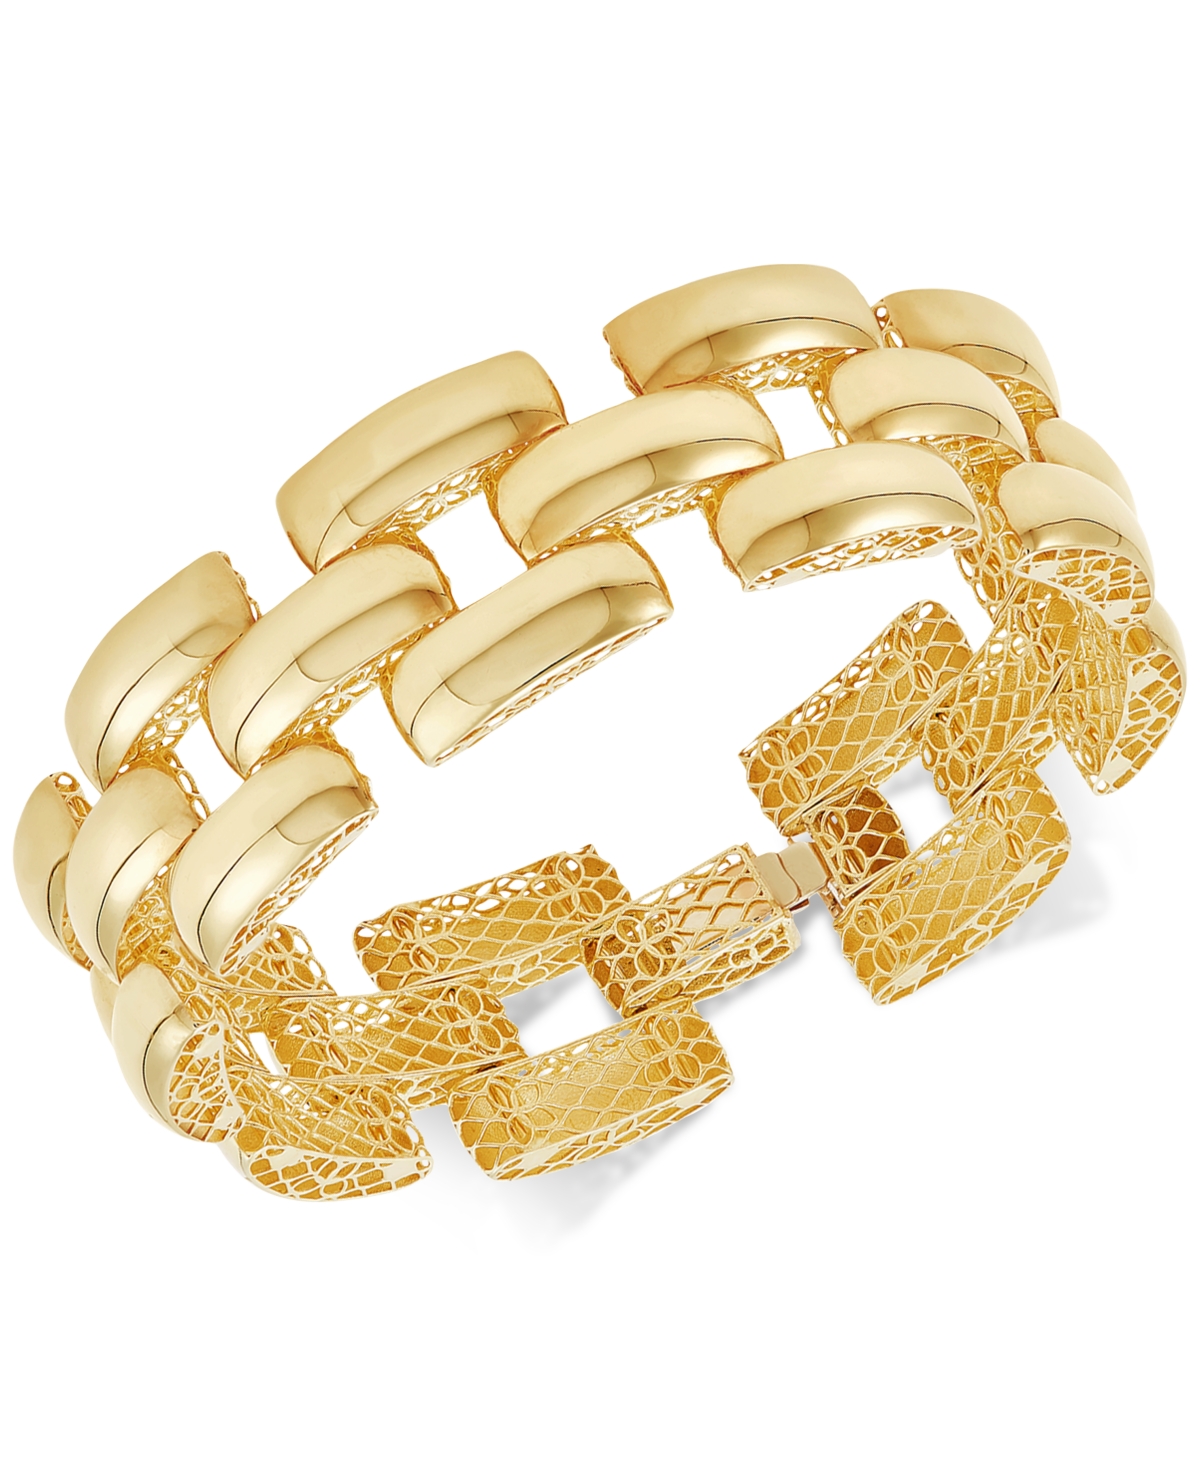 Italian Gold Stampato Panther Link Bracelet In 14k Gold